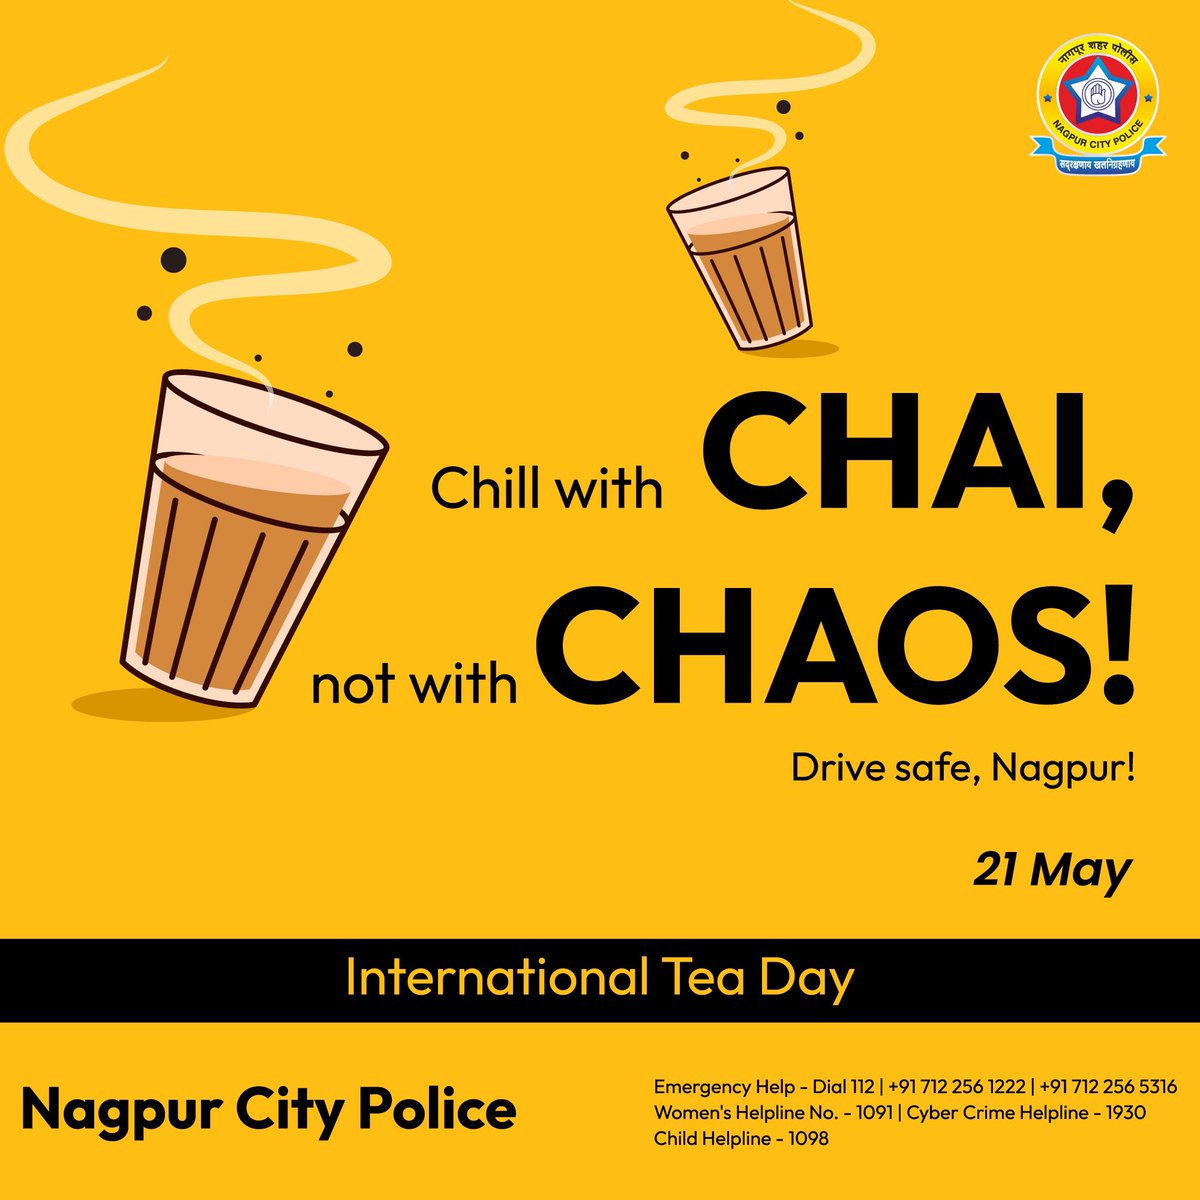 Celebrate International Tea Day with a cup of chai, not chaos! Drive safe, Nagpur. #InternationalTeaDay #DriveSafe #NagpurCityPolice #RavinderSingal